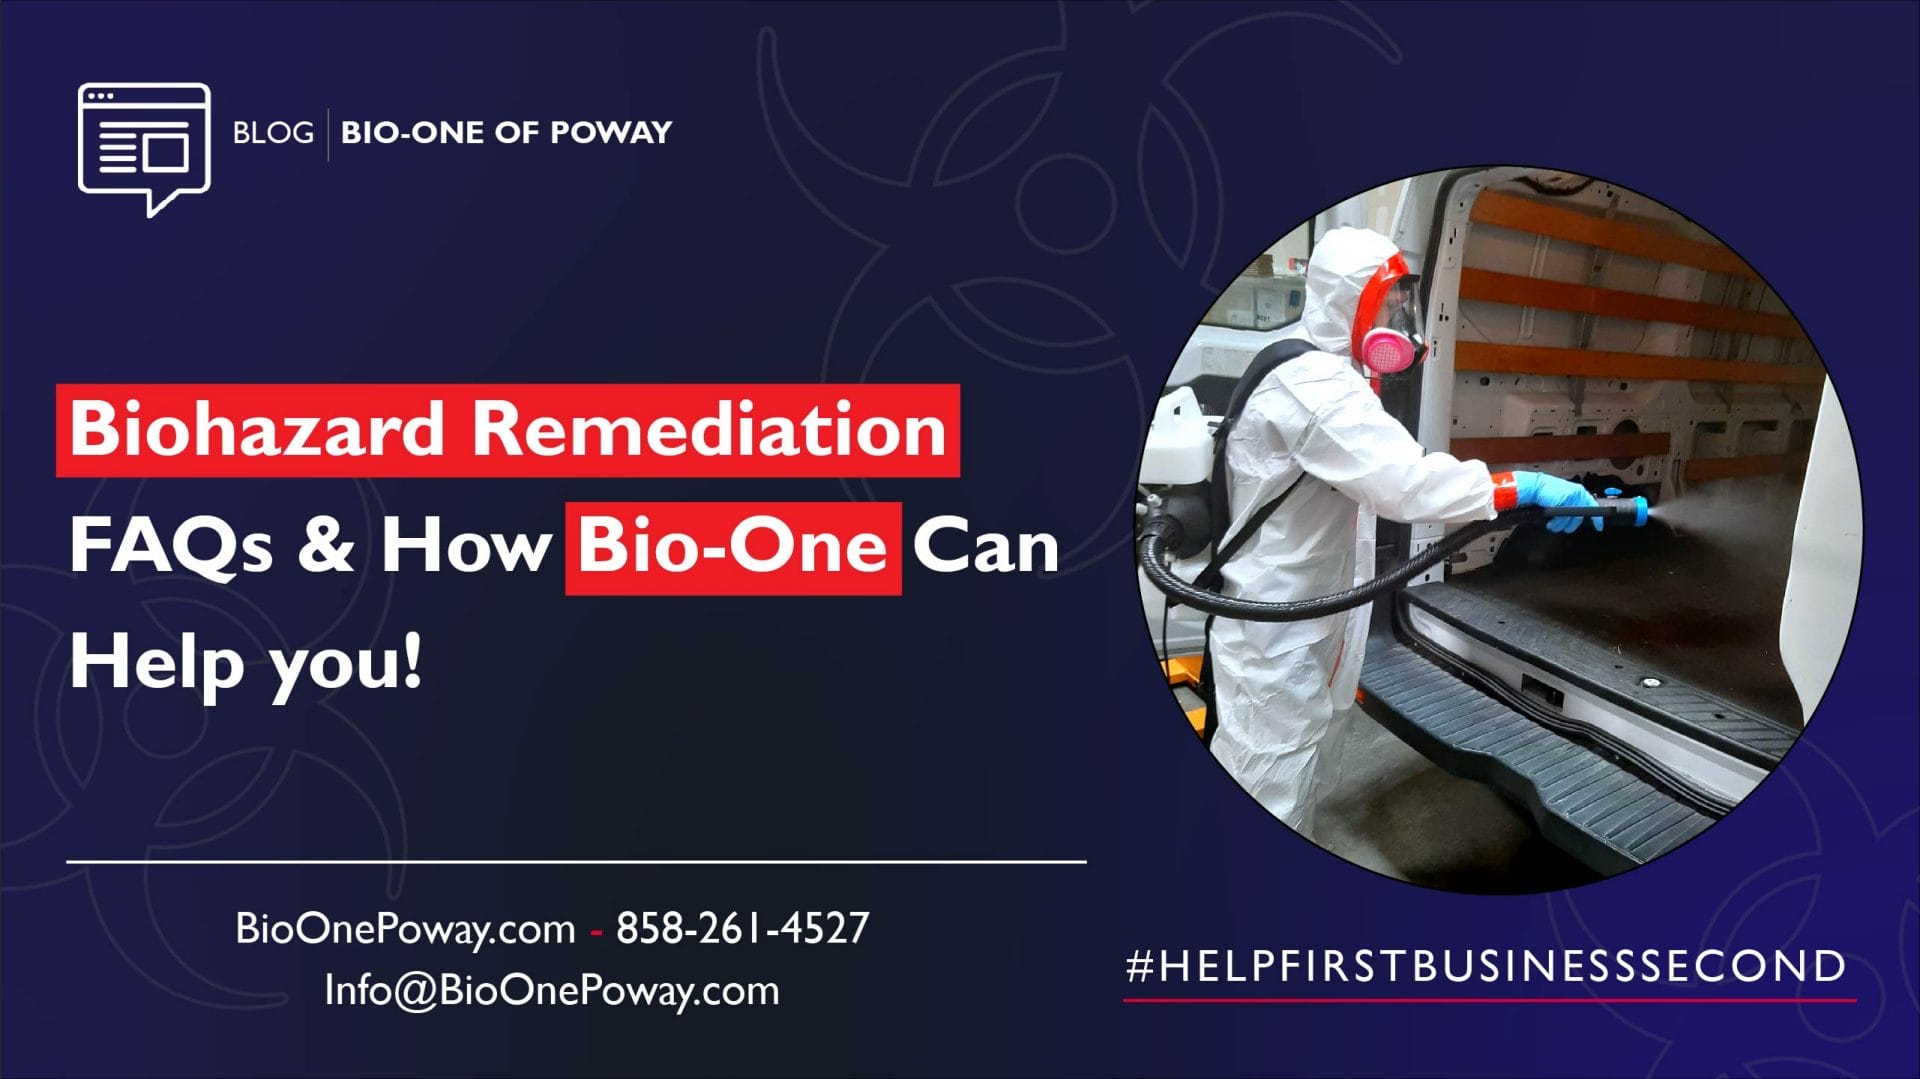 Biohazard Remediation - FAQs & How Bio-One Can Help You!